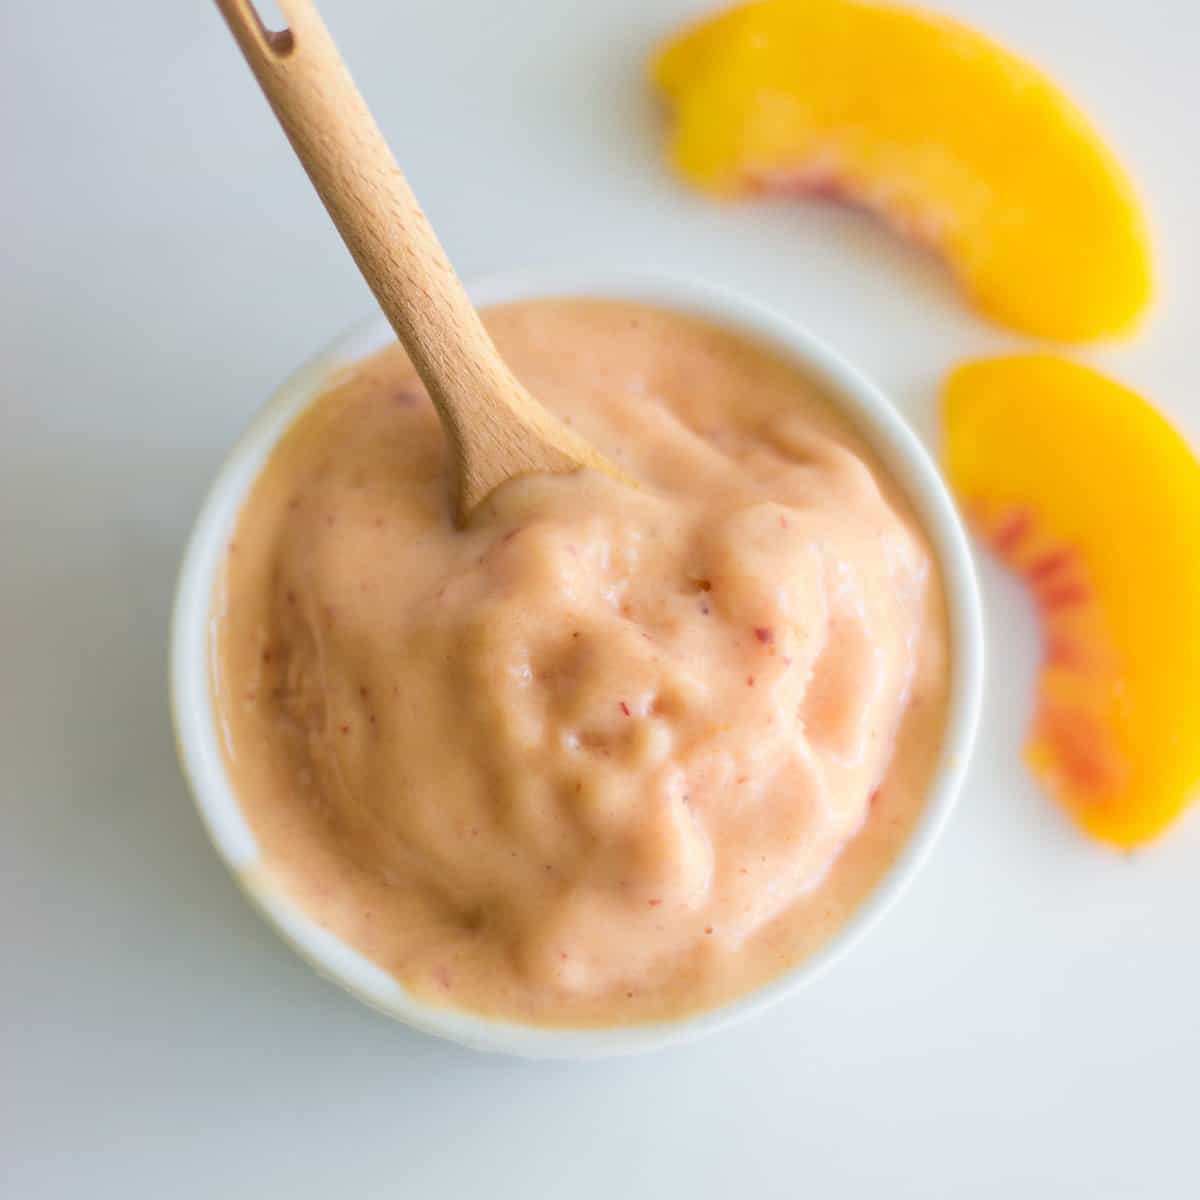 https://www.mjandhungryman.com/wp-content/uploads/2022/06/peach-puree-with-yogurt.jpg